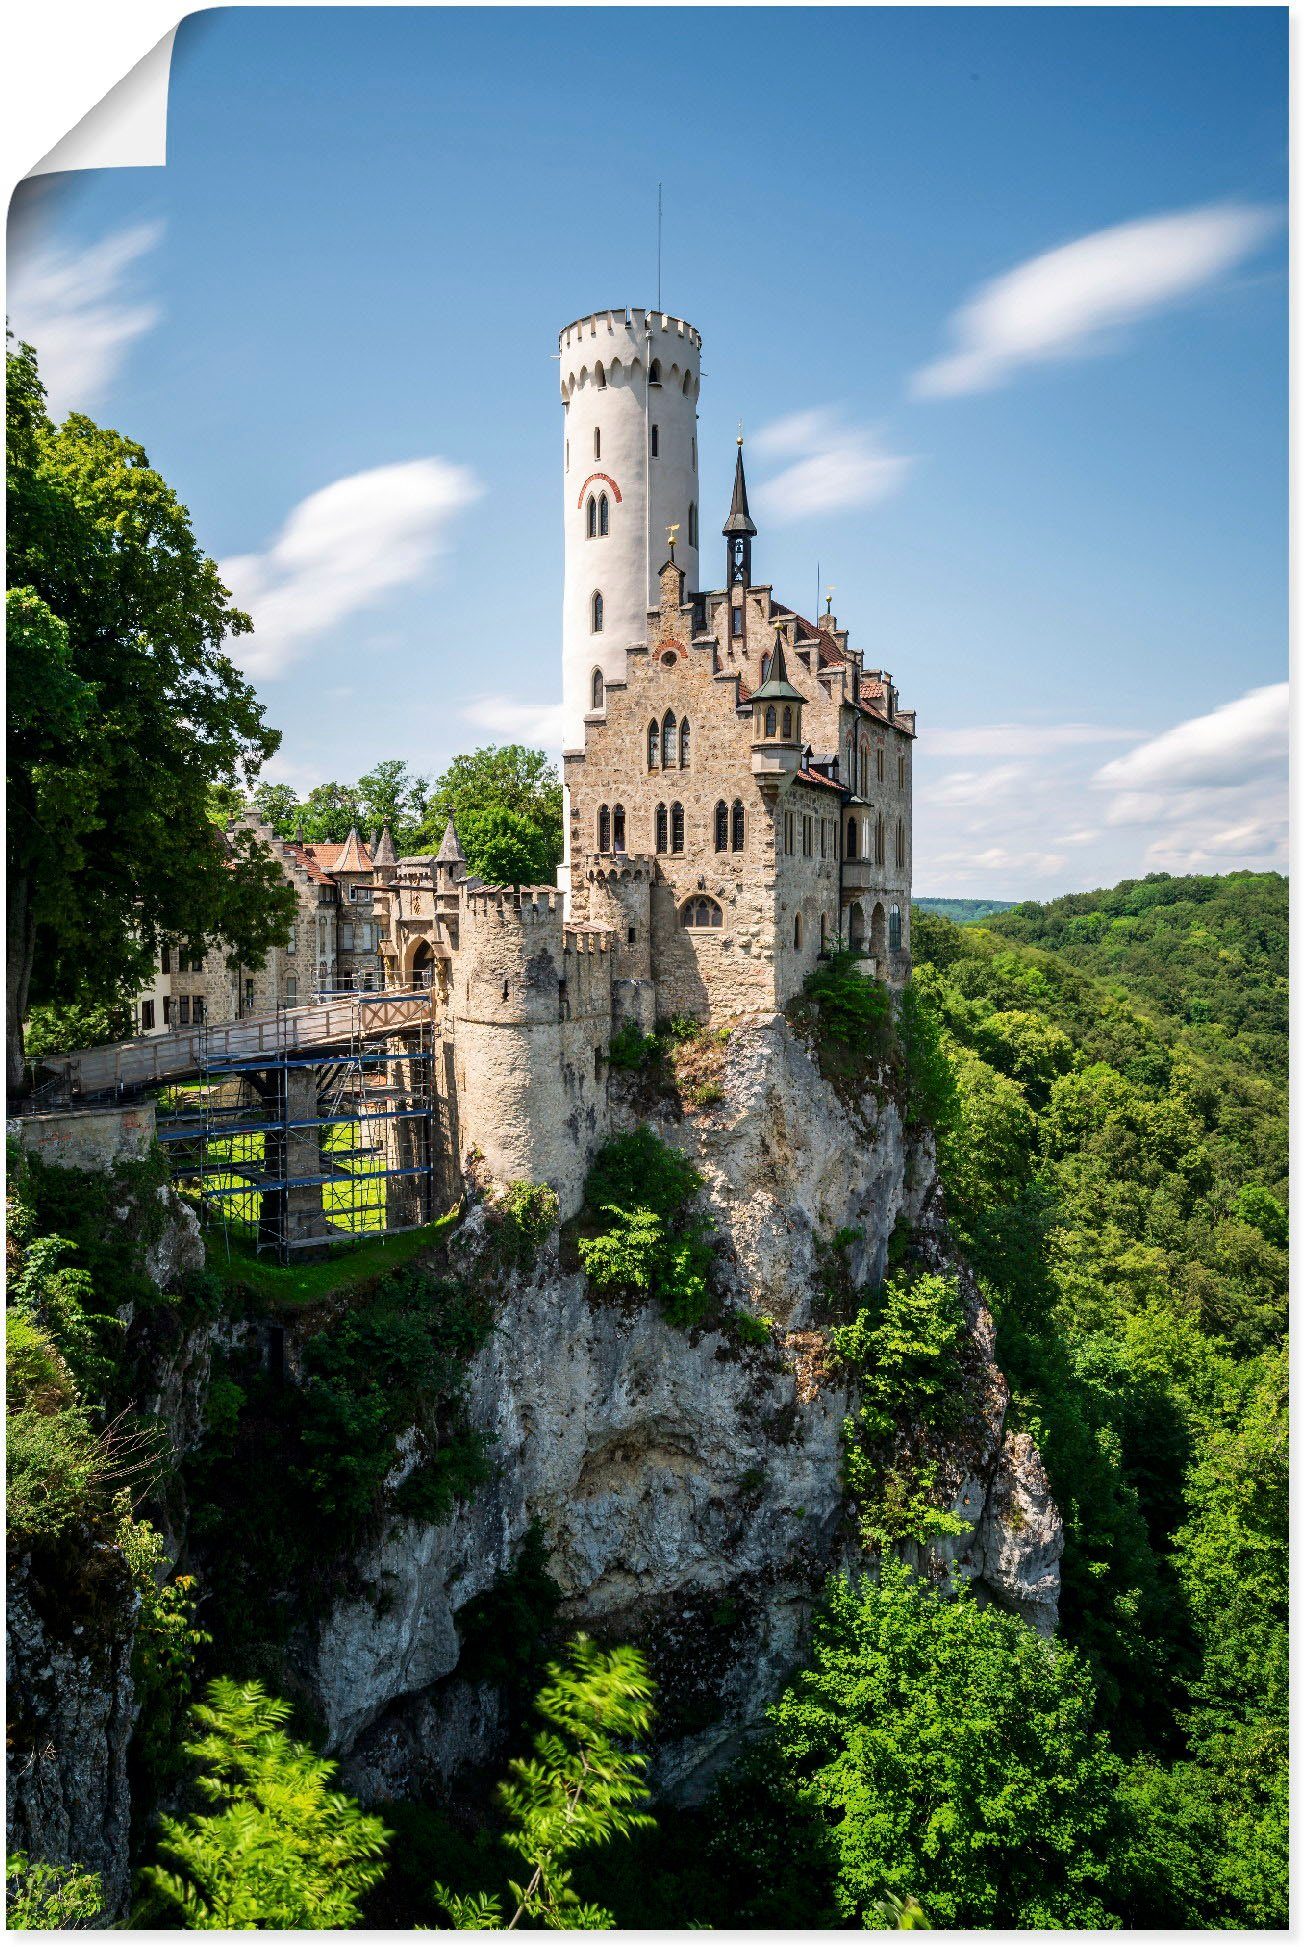 Tag, Schloss Poster Wandaufkleber Gebäude Lichtenstein Leinwandbild, (1 als versch. Artland St), oder am Wandbild sonnigen Alubild, in Größen